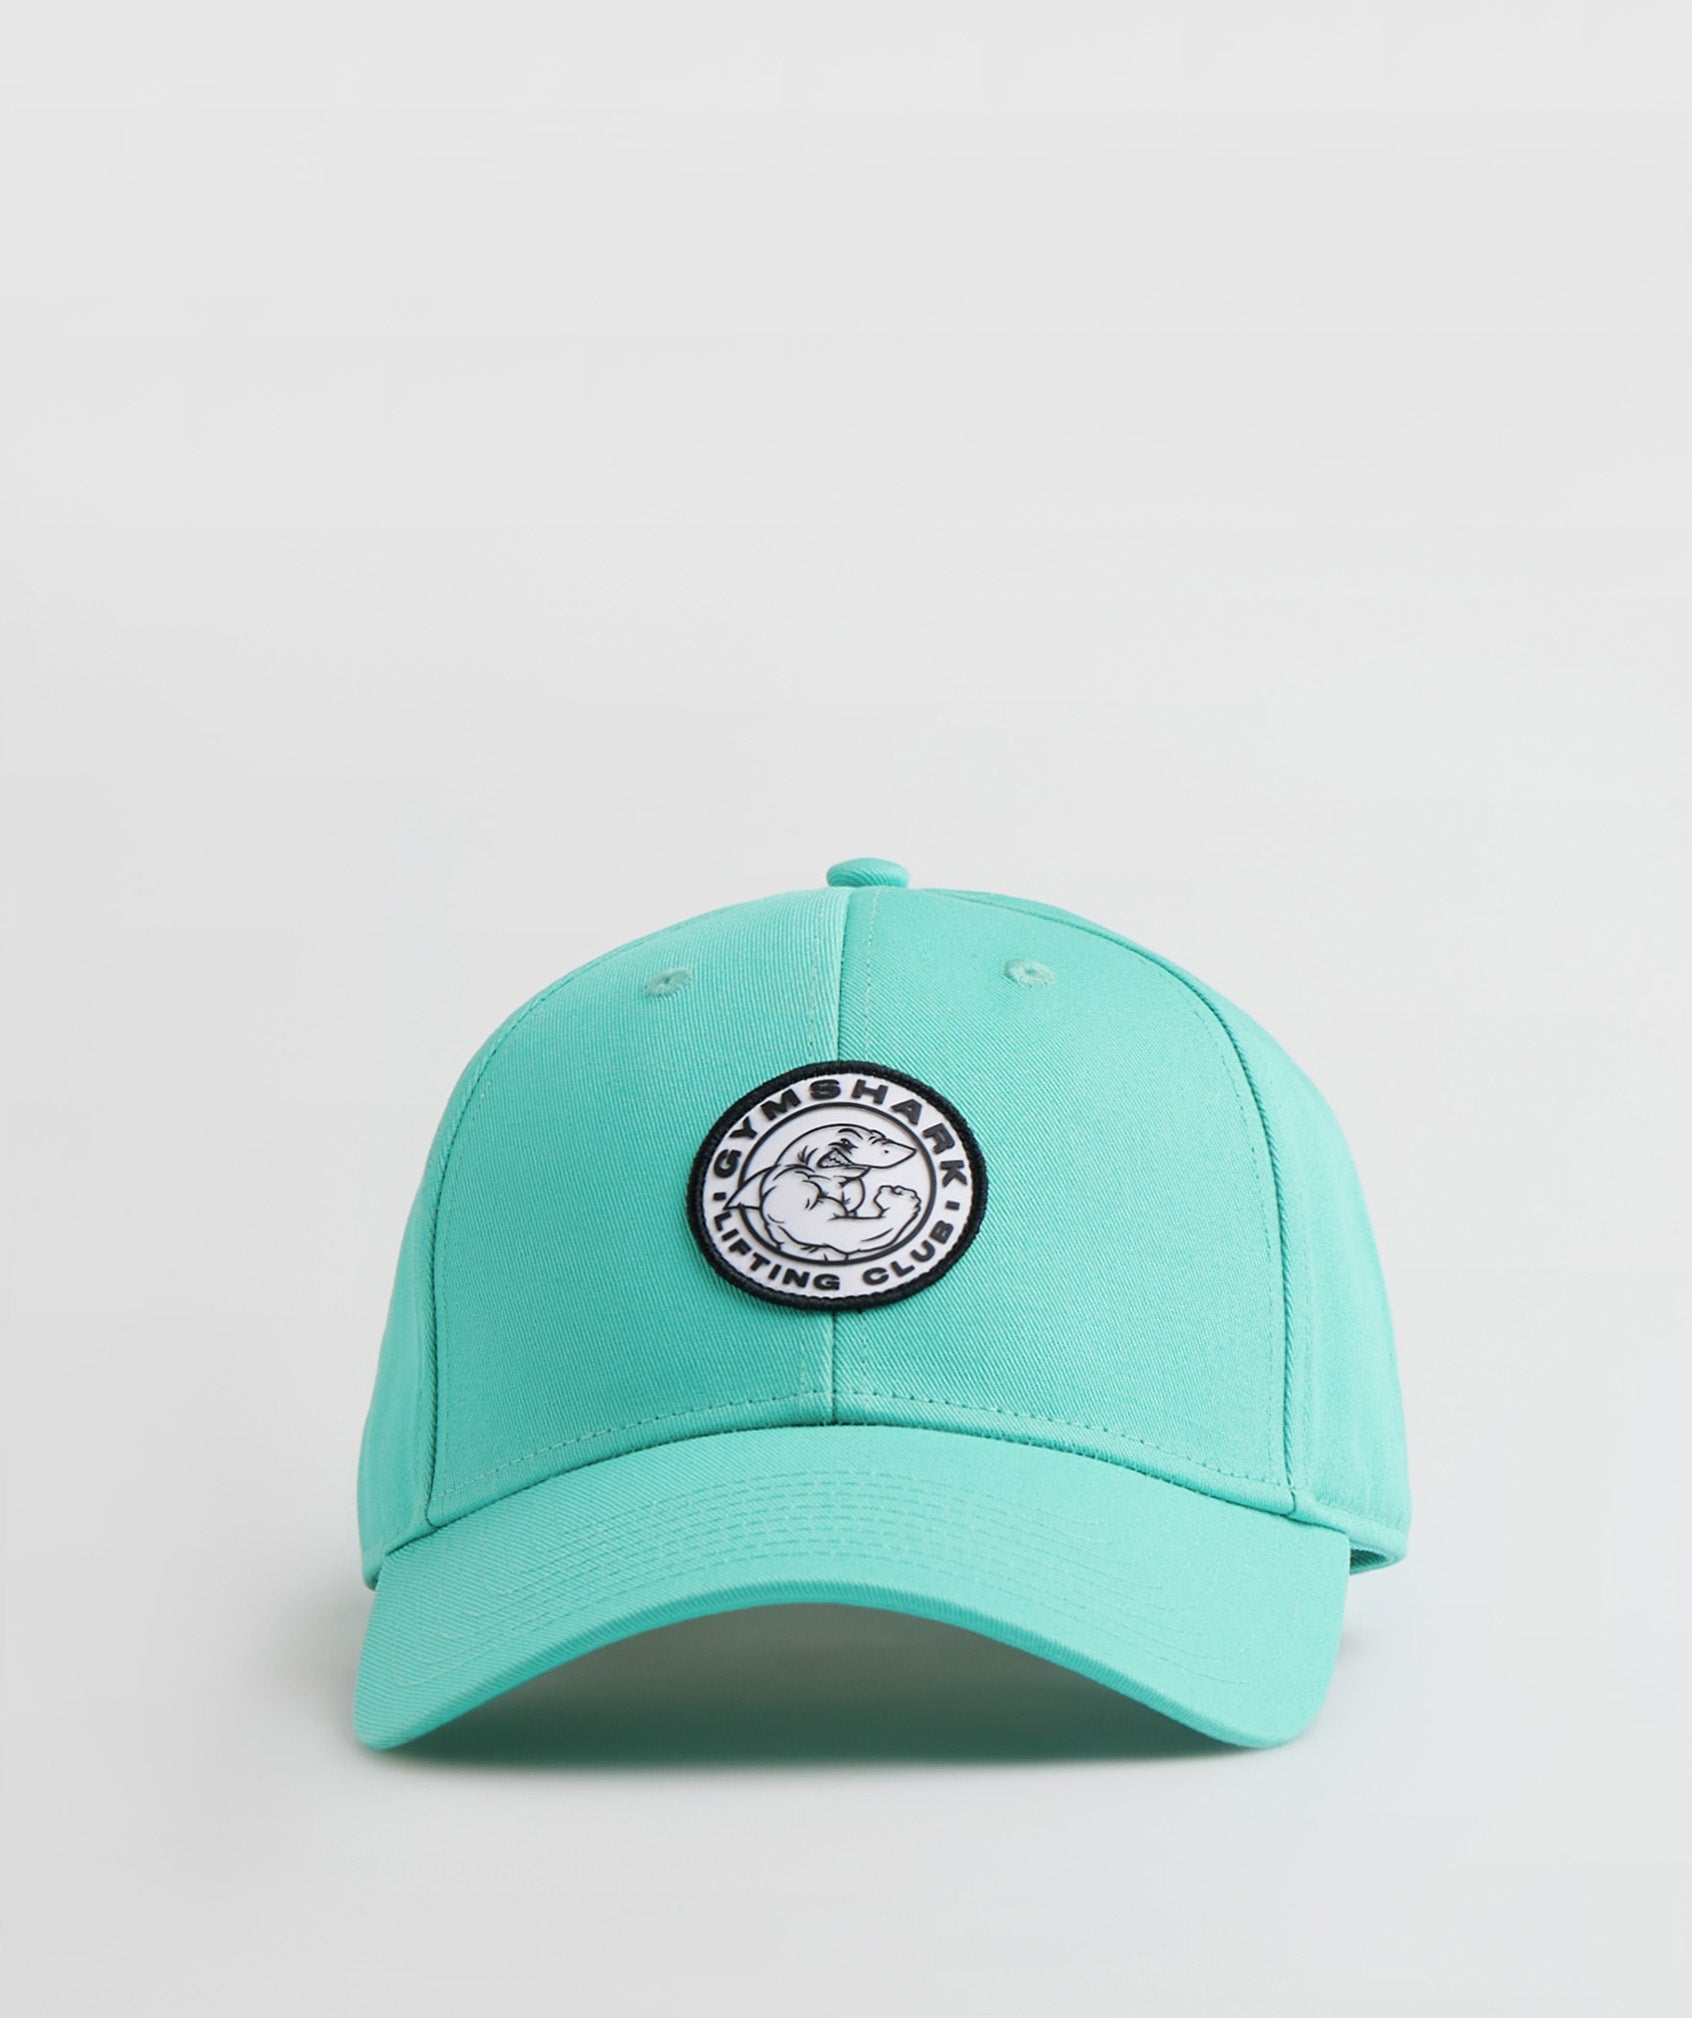 Gymshark Legacy Cap - Bright Turquoise | Gymshark